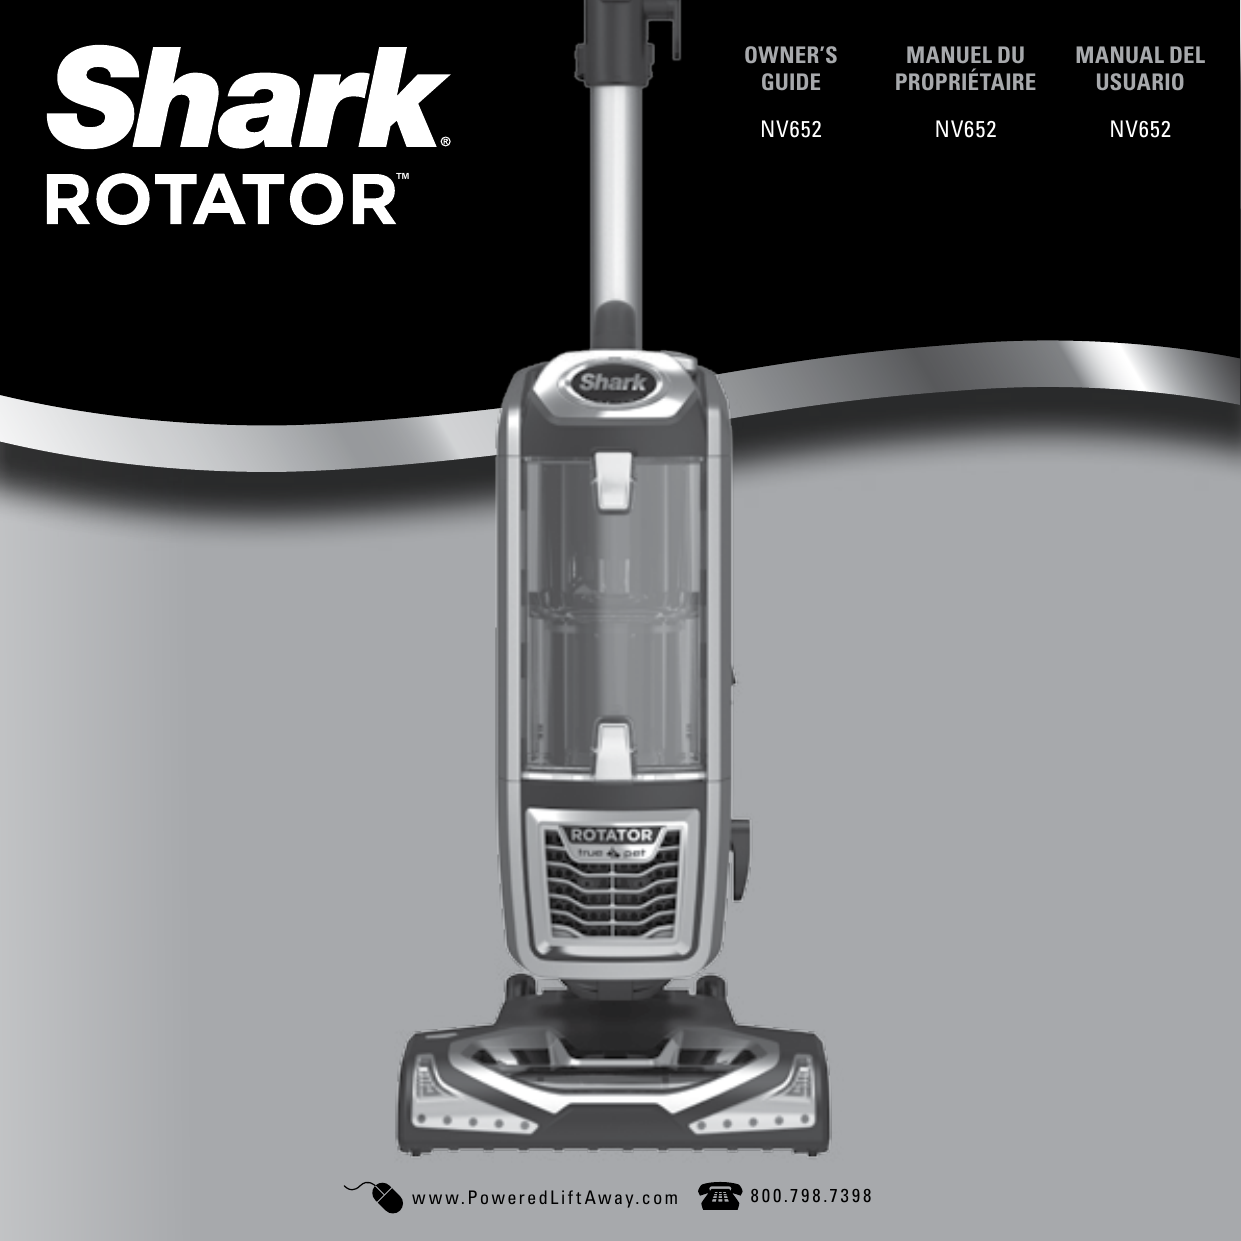 Page 1 of 11 - Shark Shark-Shark-Rotator-Powered-Lift-Away-Upright-Vacuum-Nv652-Owners-Guide-  Shark-shark-rotator-powered-lift-away-upright-vacuum-nv652-owners-guide